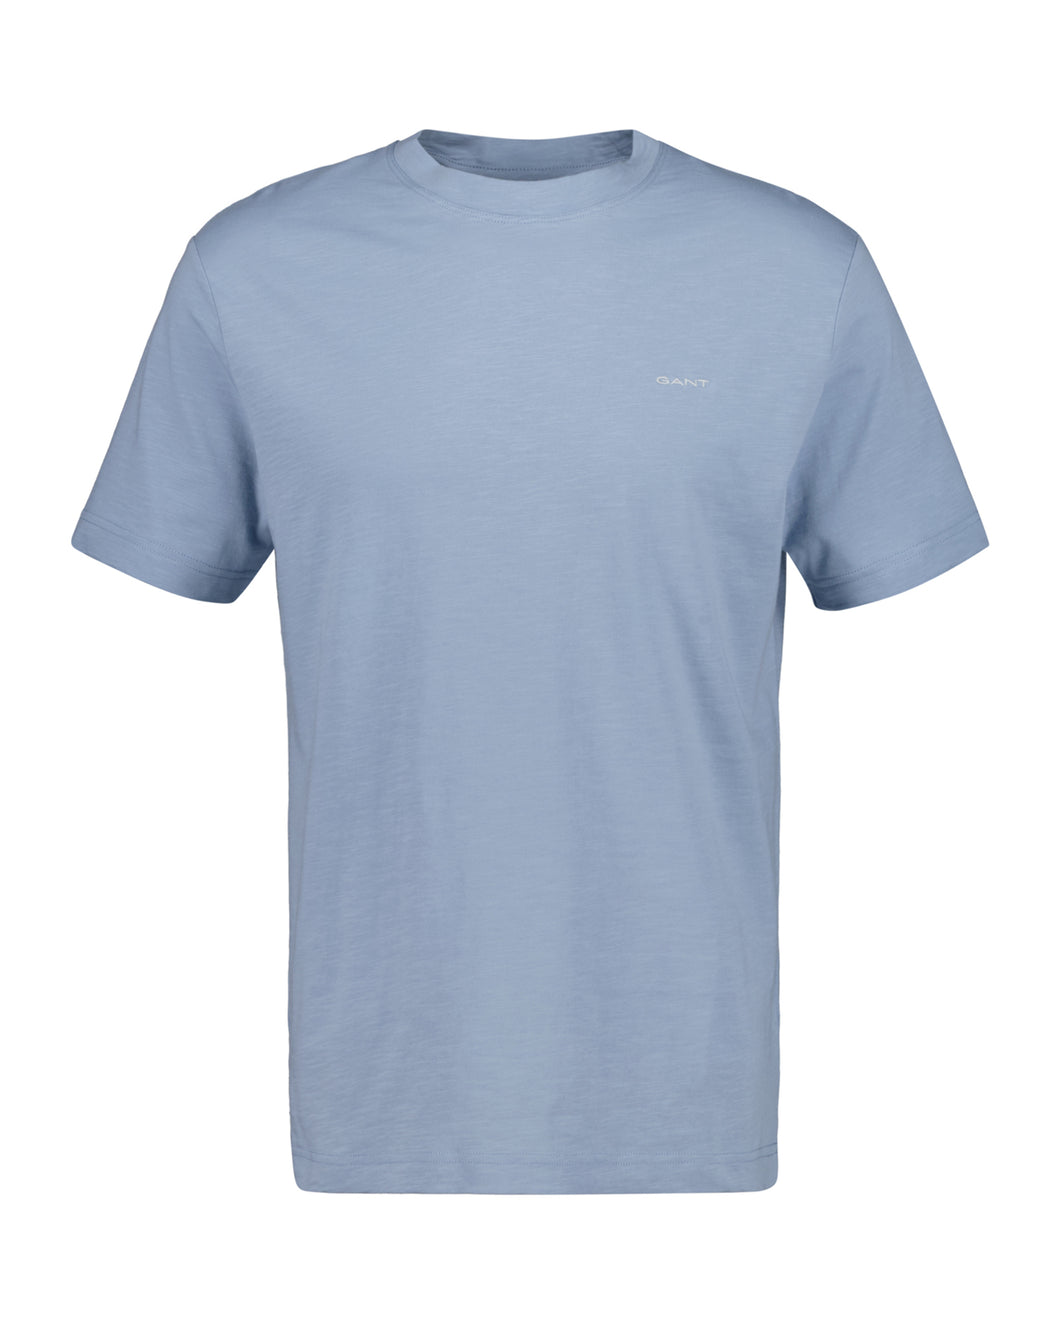 GANT Slub Texture Short Sleeve T-Shirt 2033021